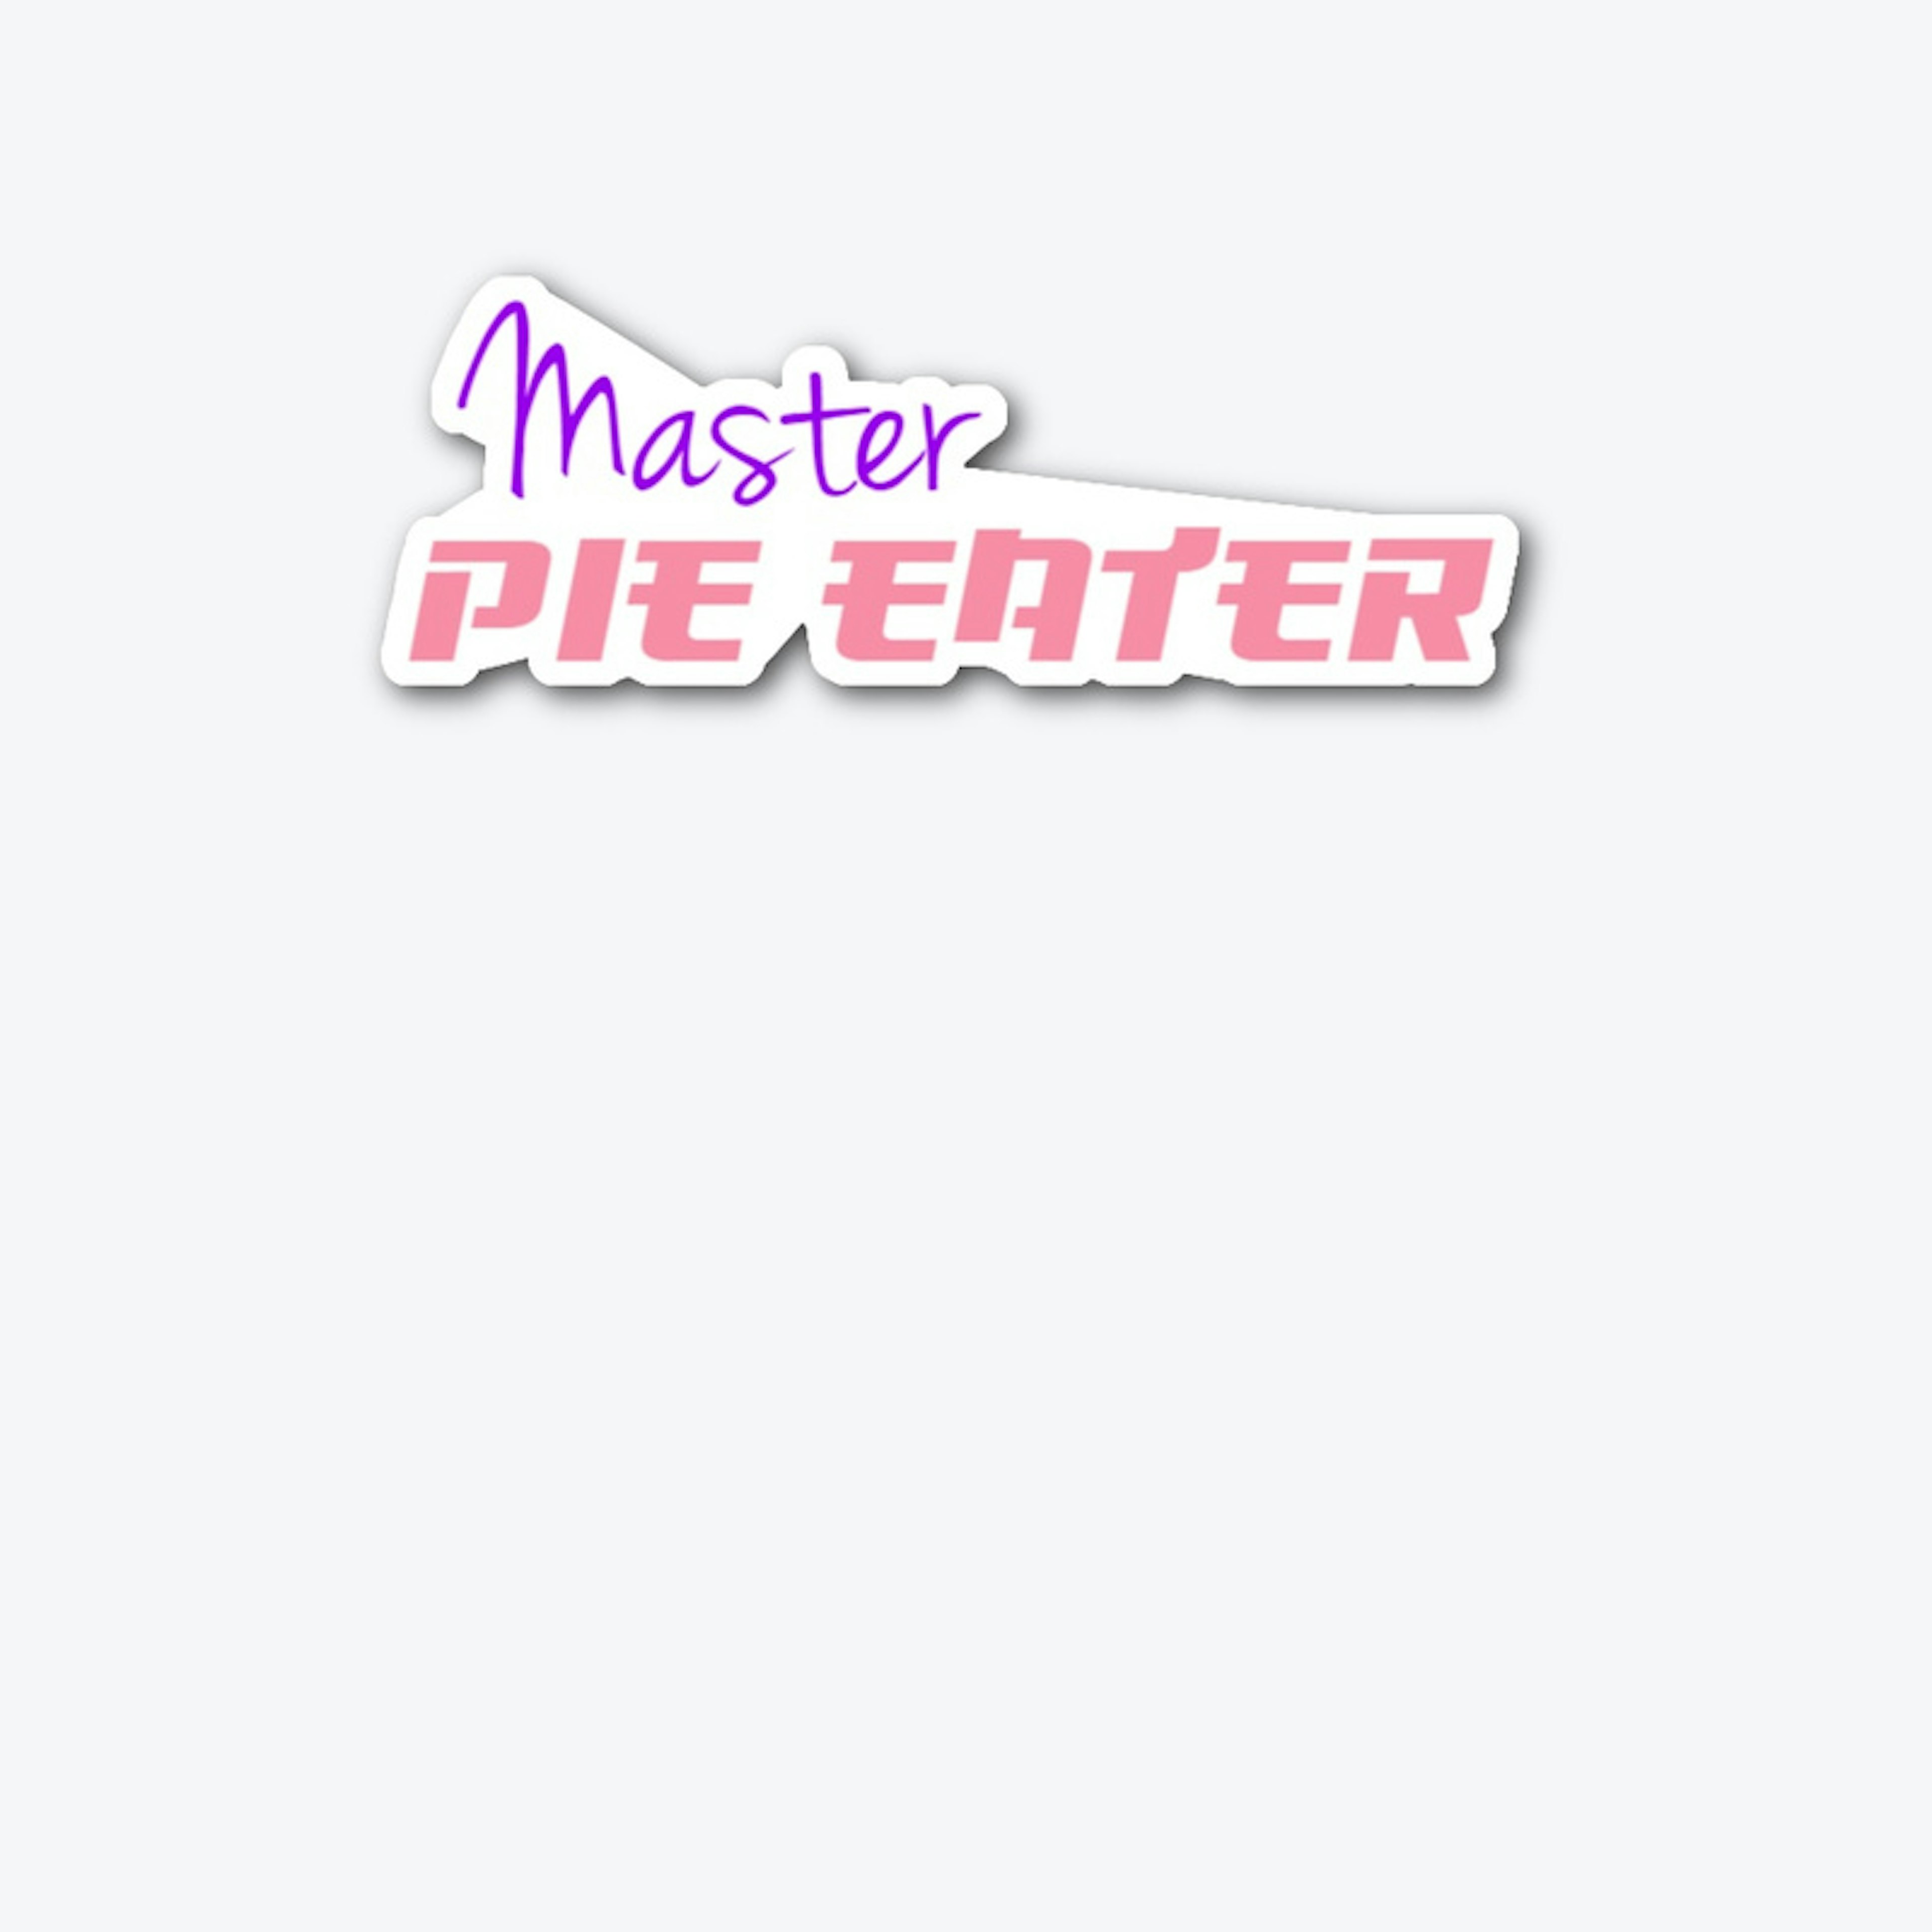 Master Pie Eater 